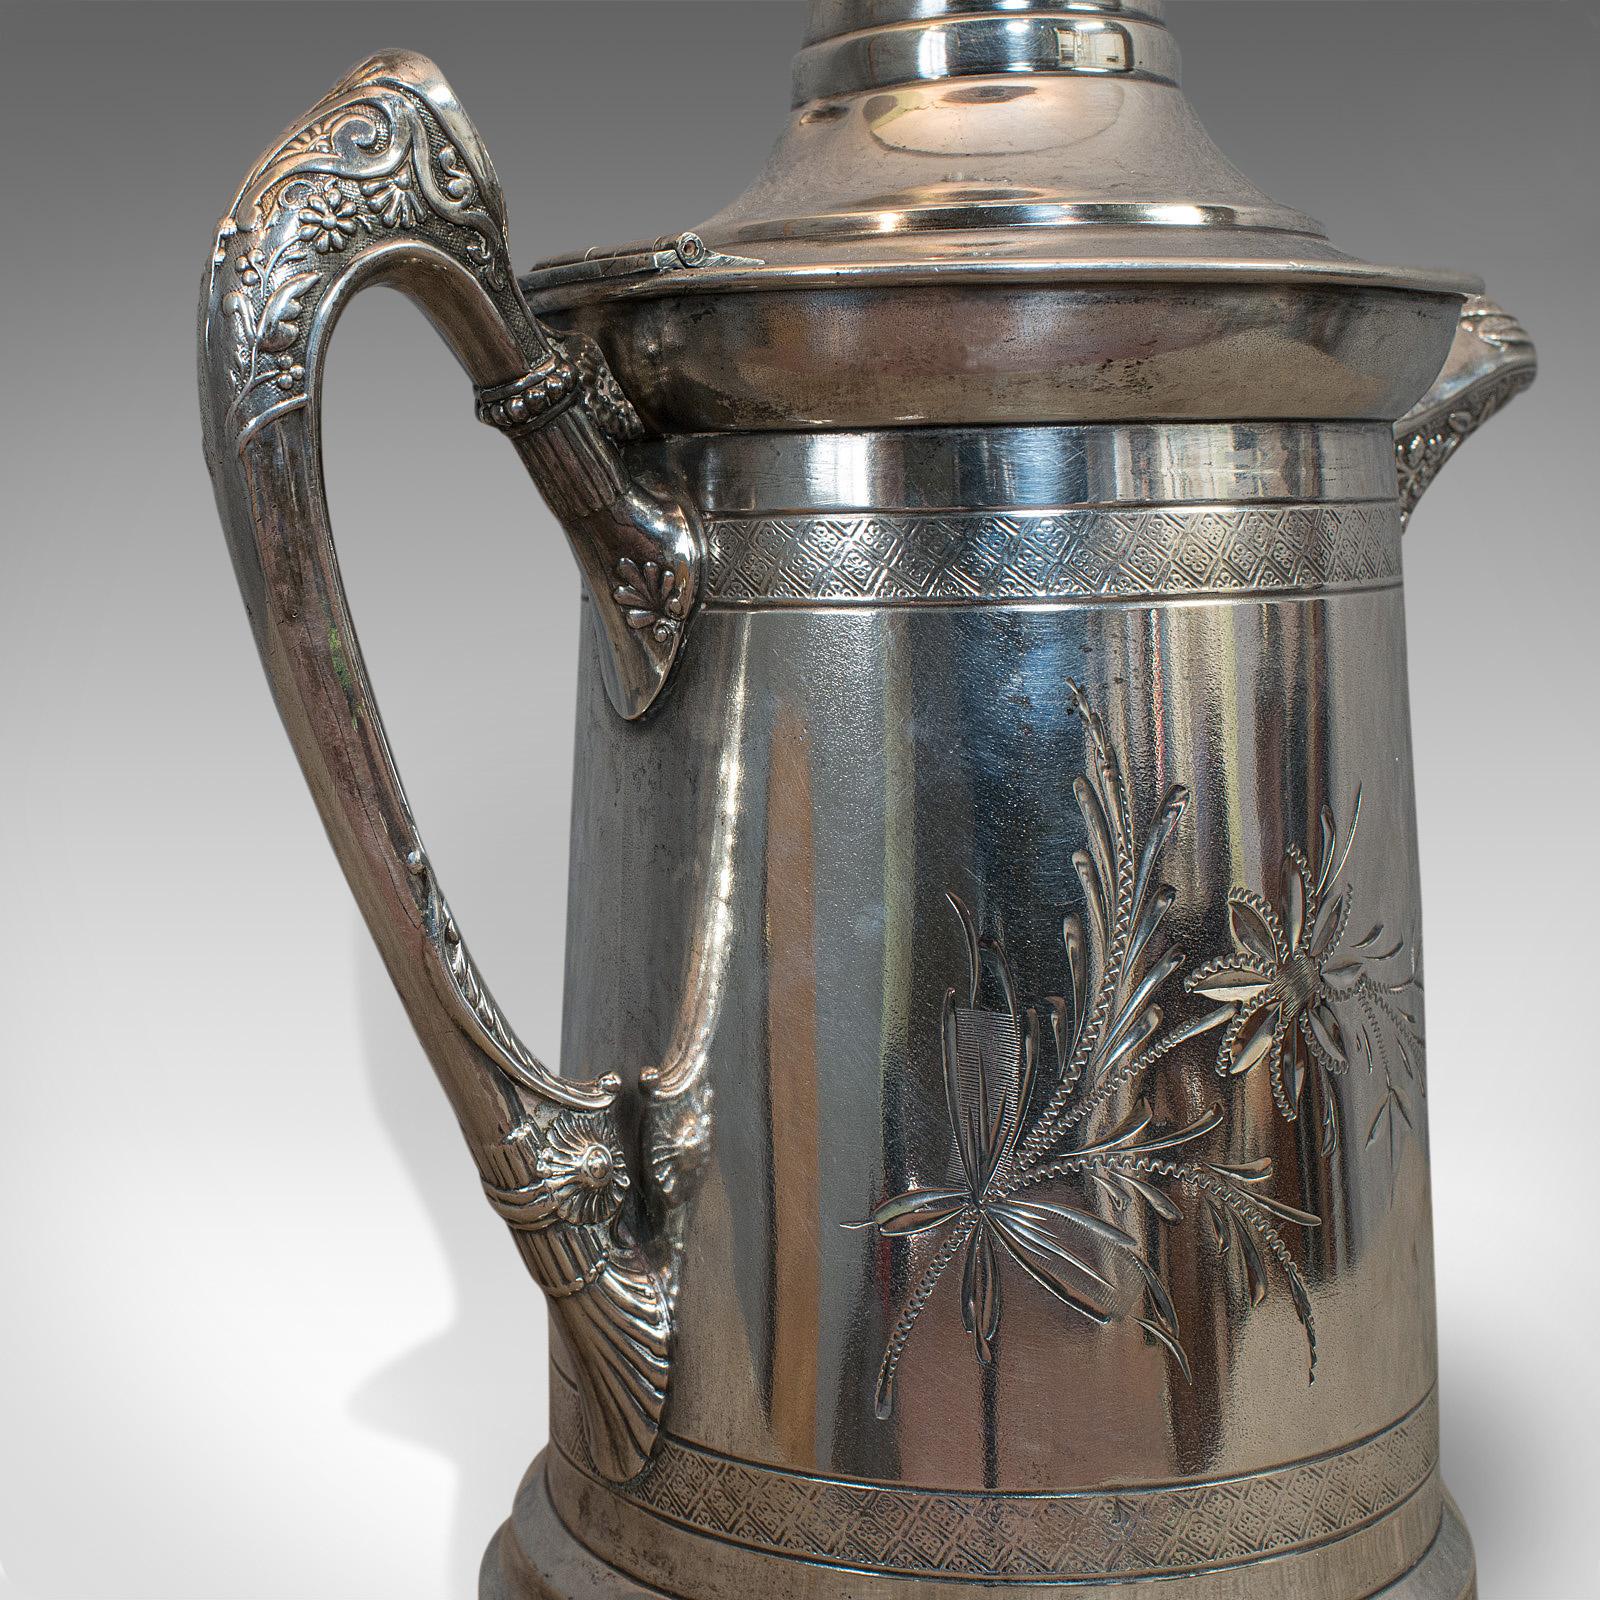 Antique Coffee Pot, English Silver Plate, Beverage Jug, 19th Century, circa 1900 5